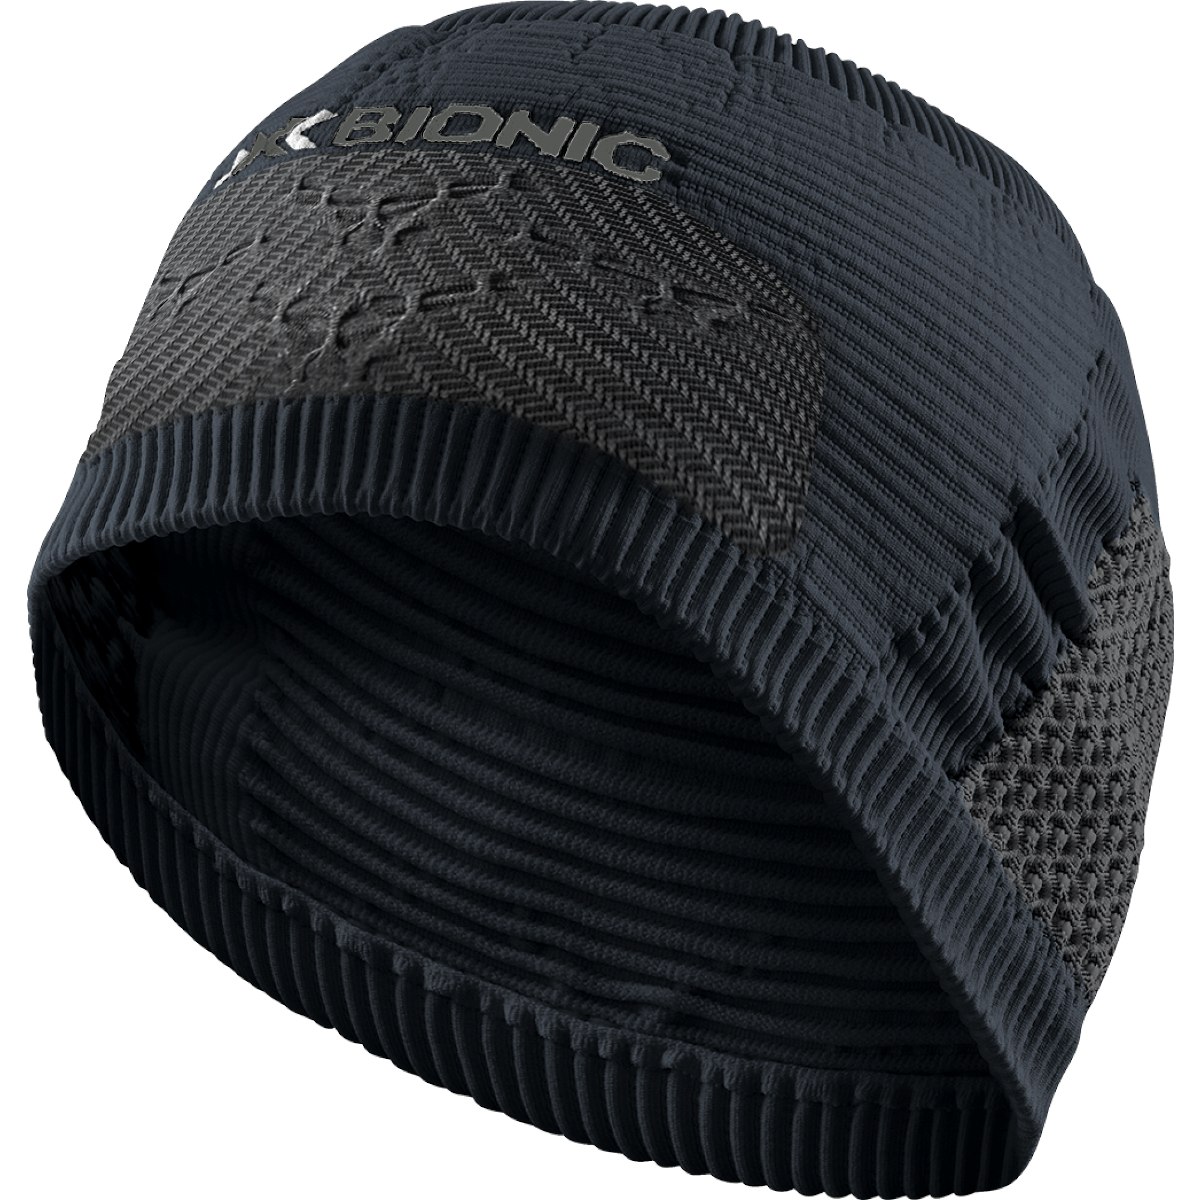 Productfoto van X-Bionic High Headband 4.0 - black/charcoal